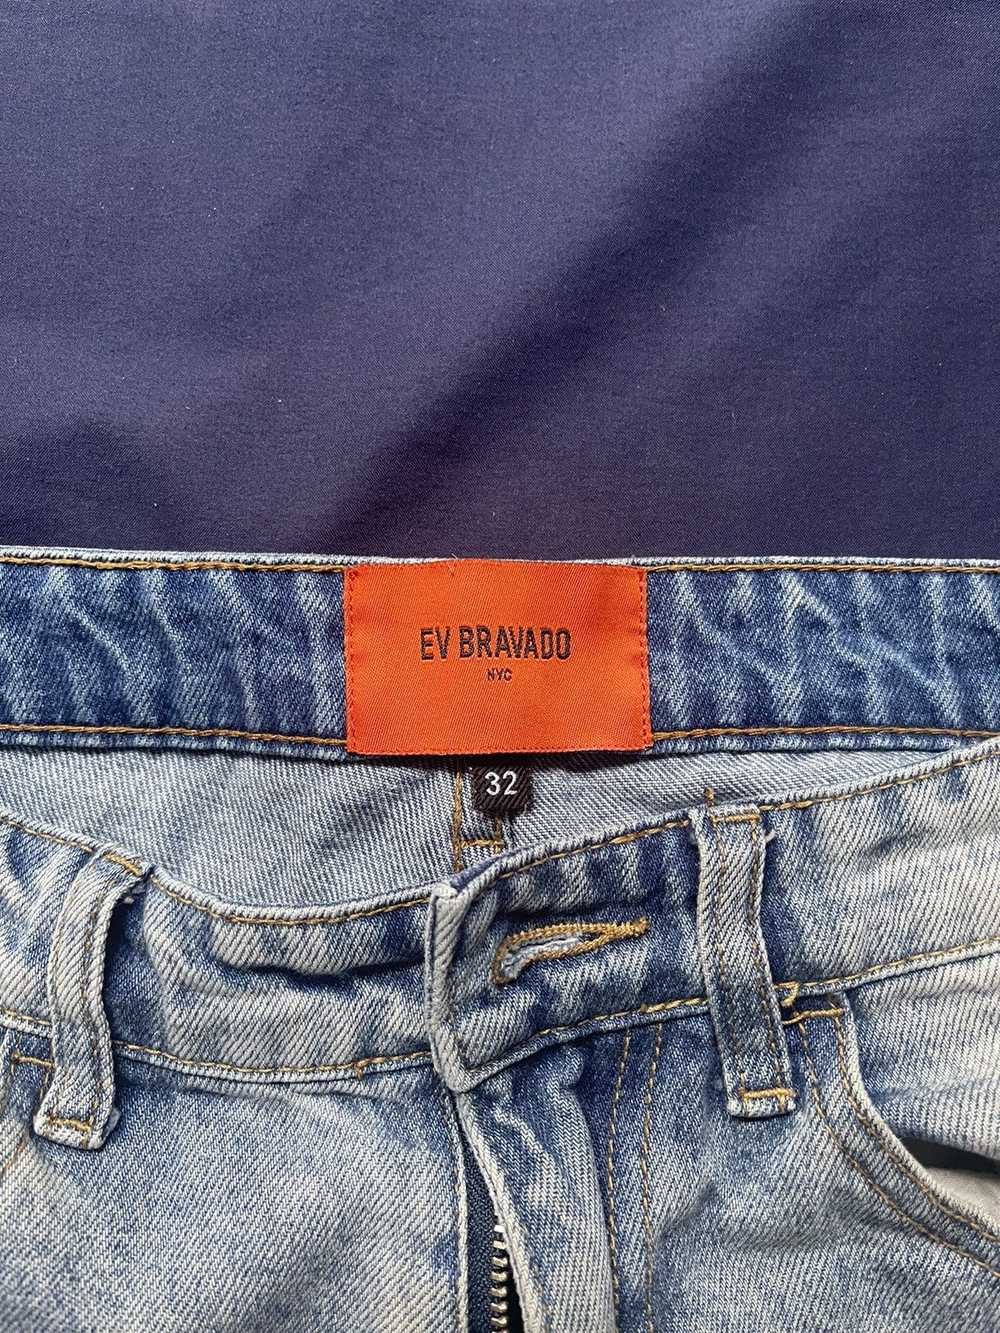 Bravado Murder Bravado Jeans - image 3